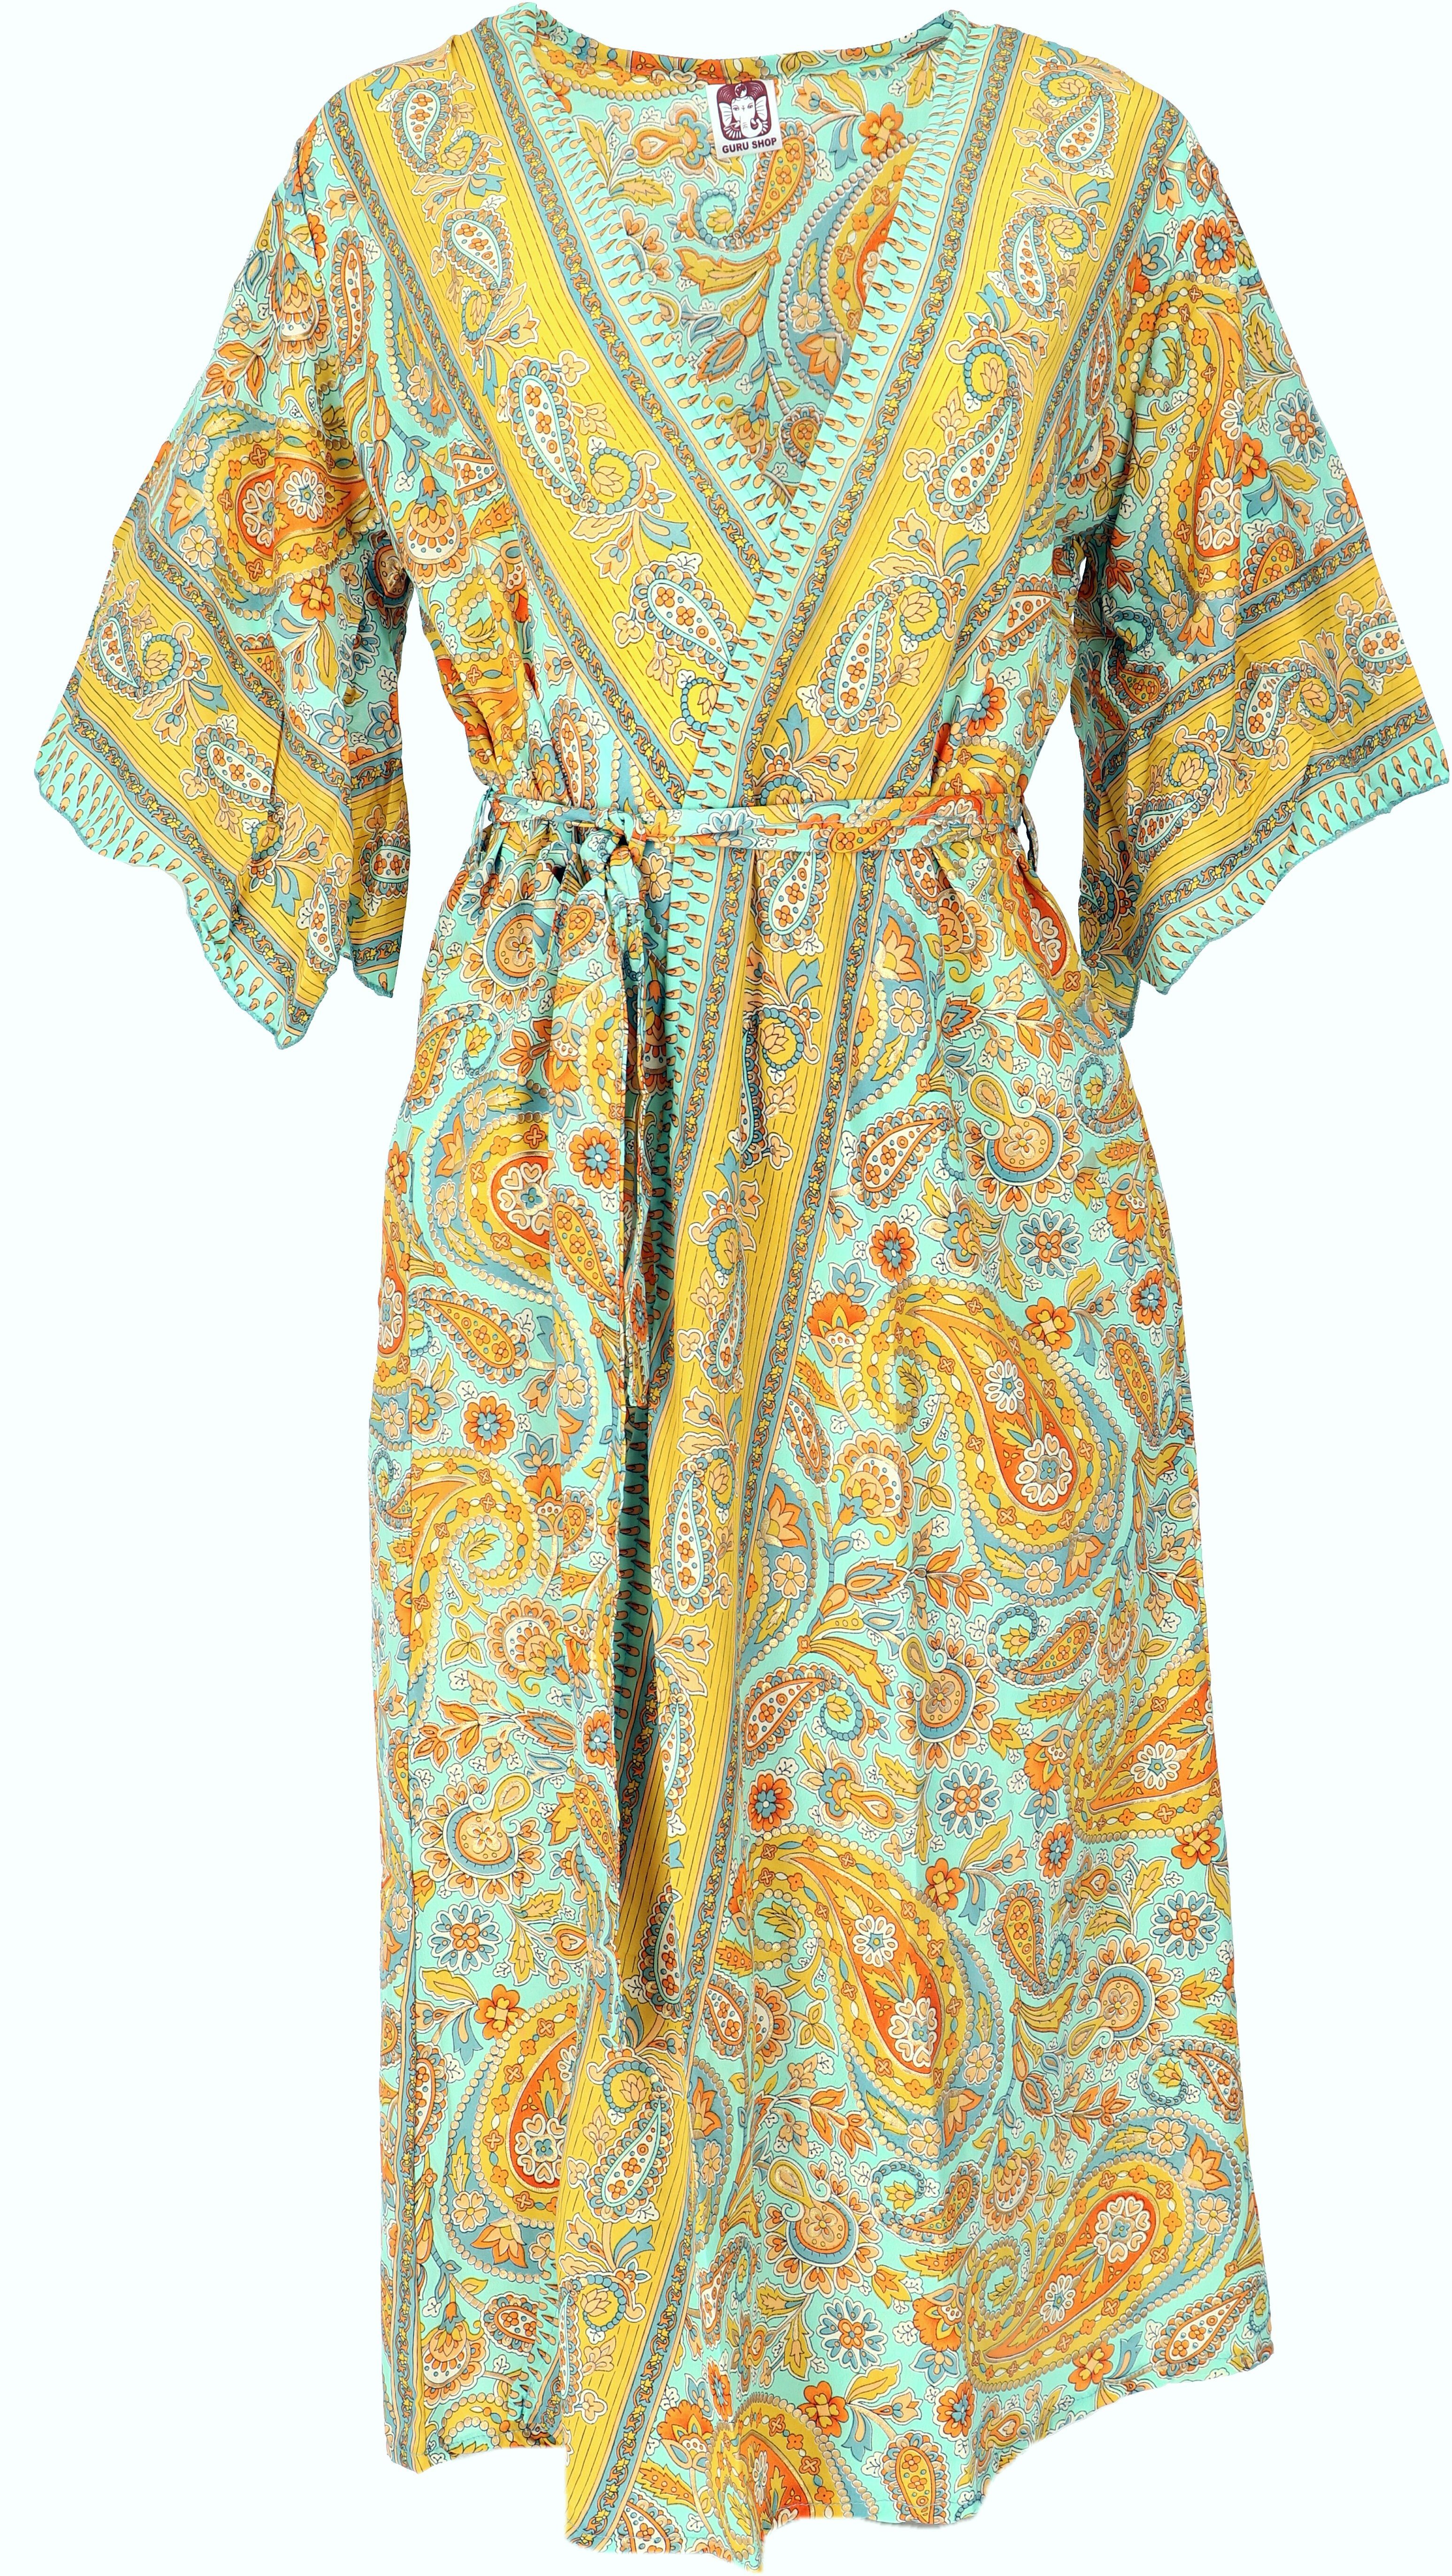 Guru-Shop Kimono Langer Kimono im Japan Style, Kimono Mantel,.., alternative Bekleidung türkis